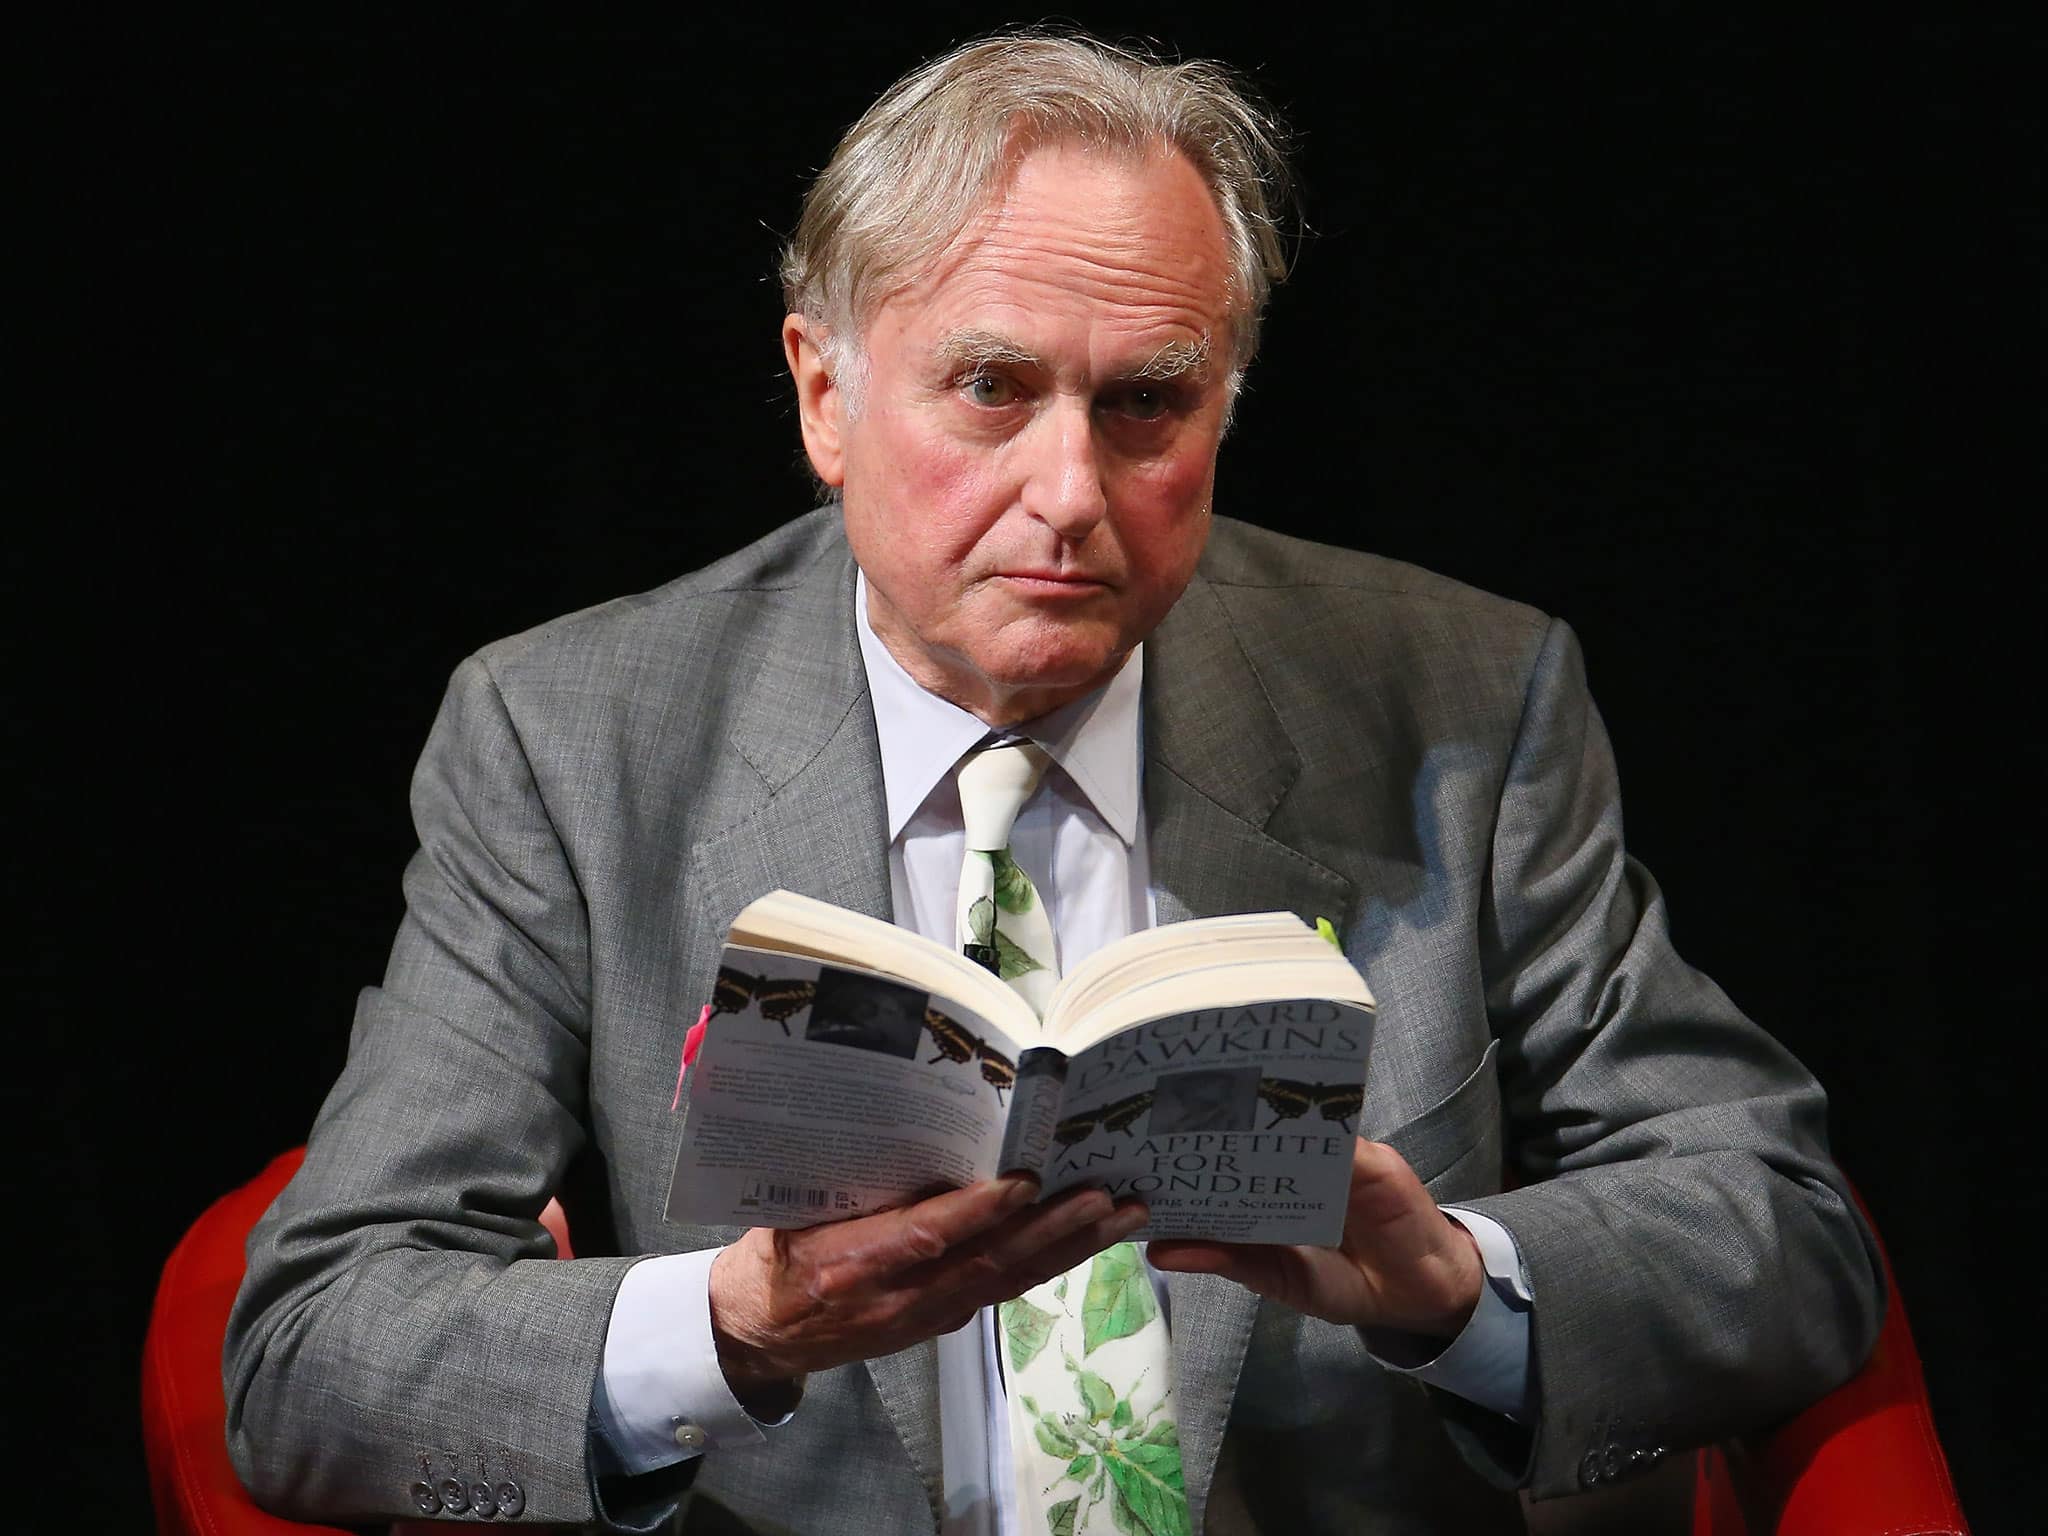 ¿Comerías carne humana cultivada en laboratorio? Richard Dawkins plantea un interesante dilema